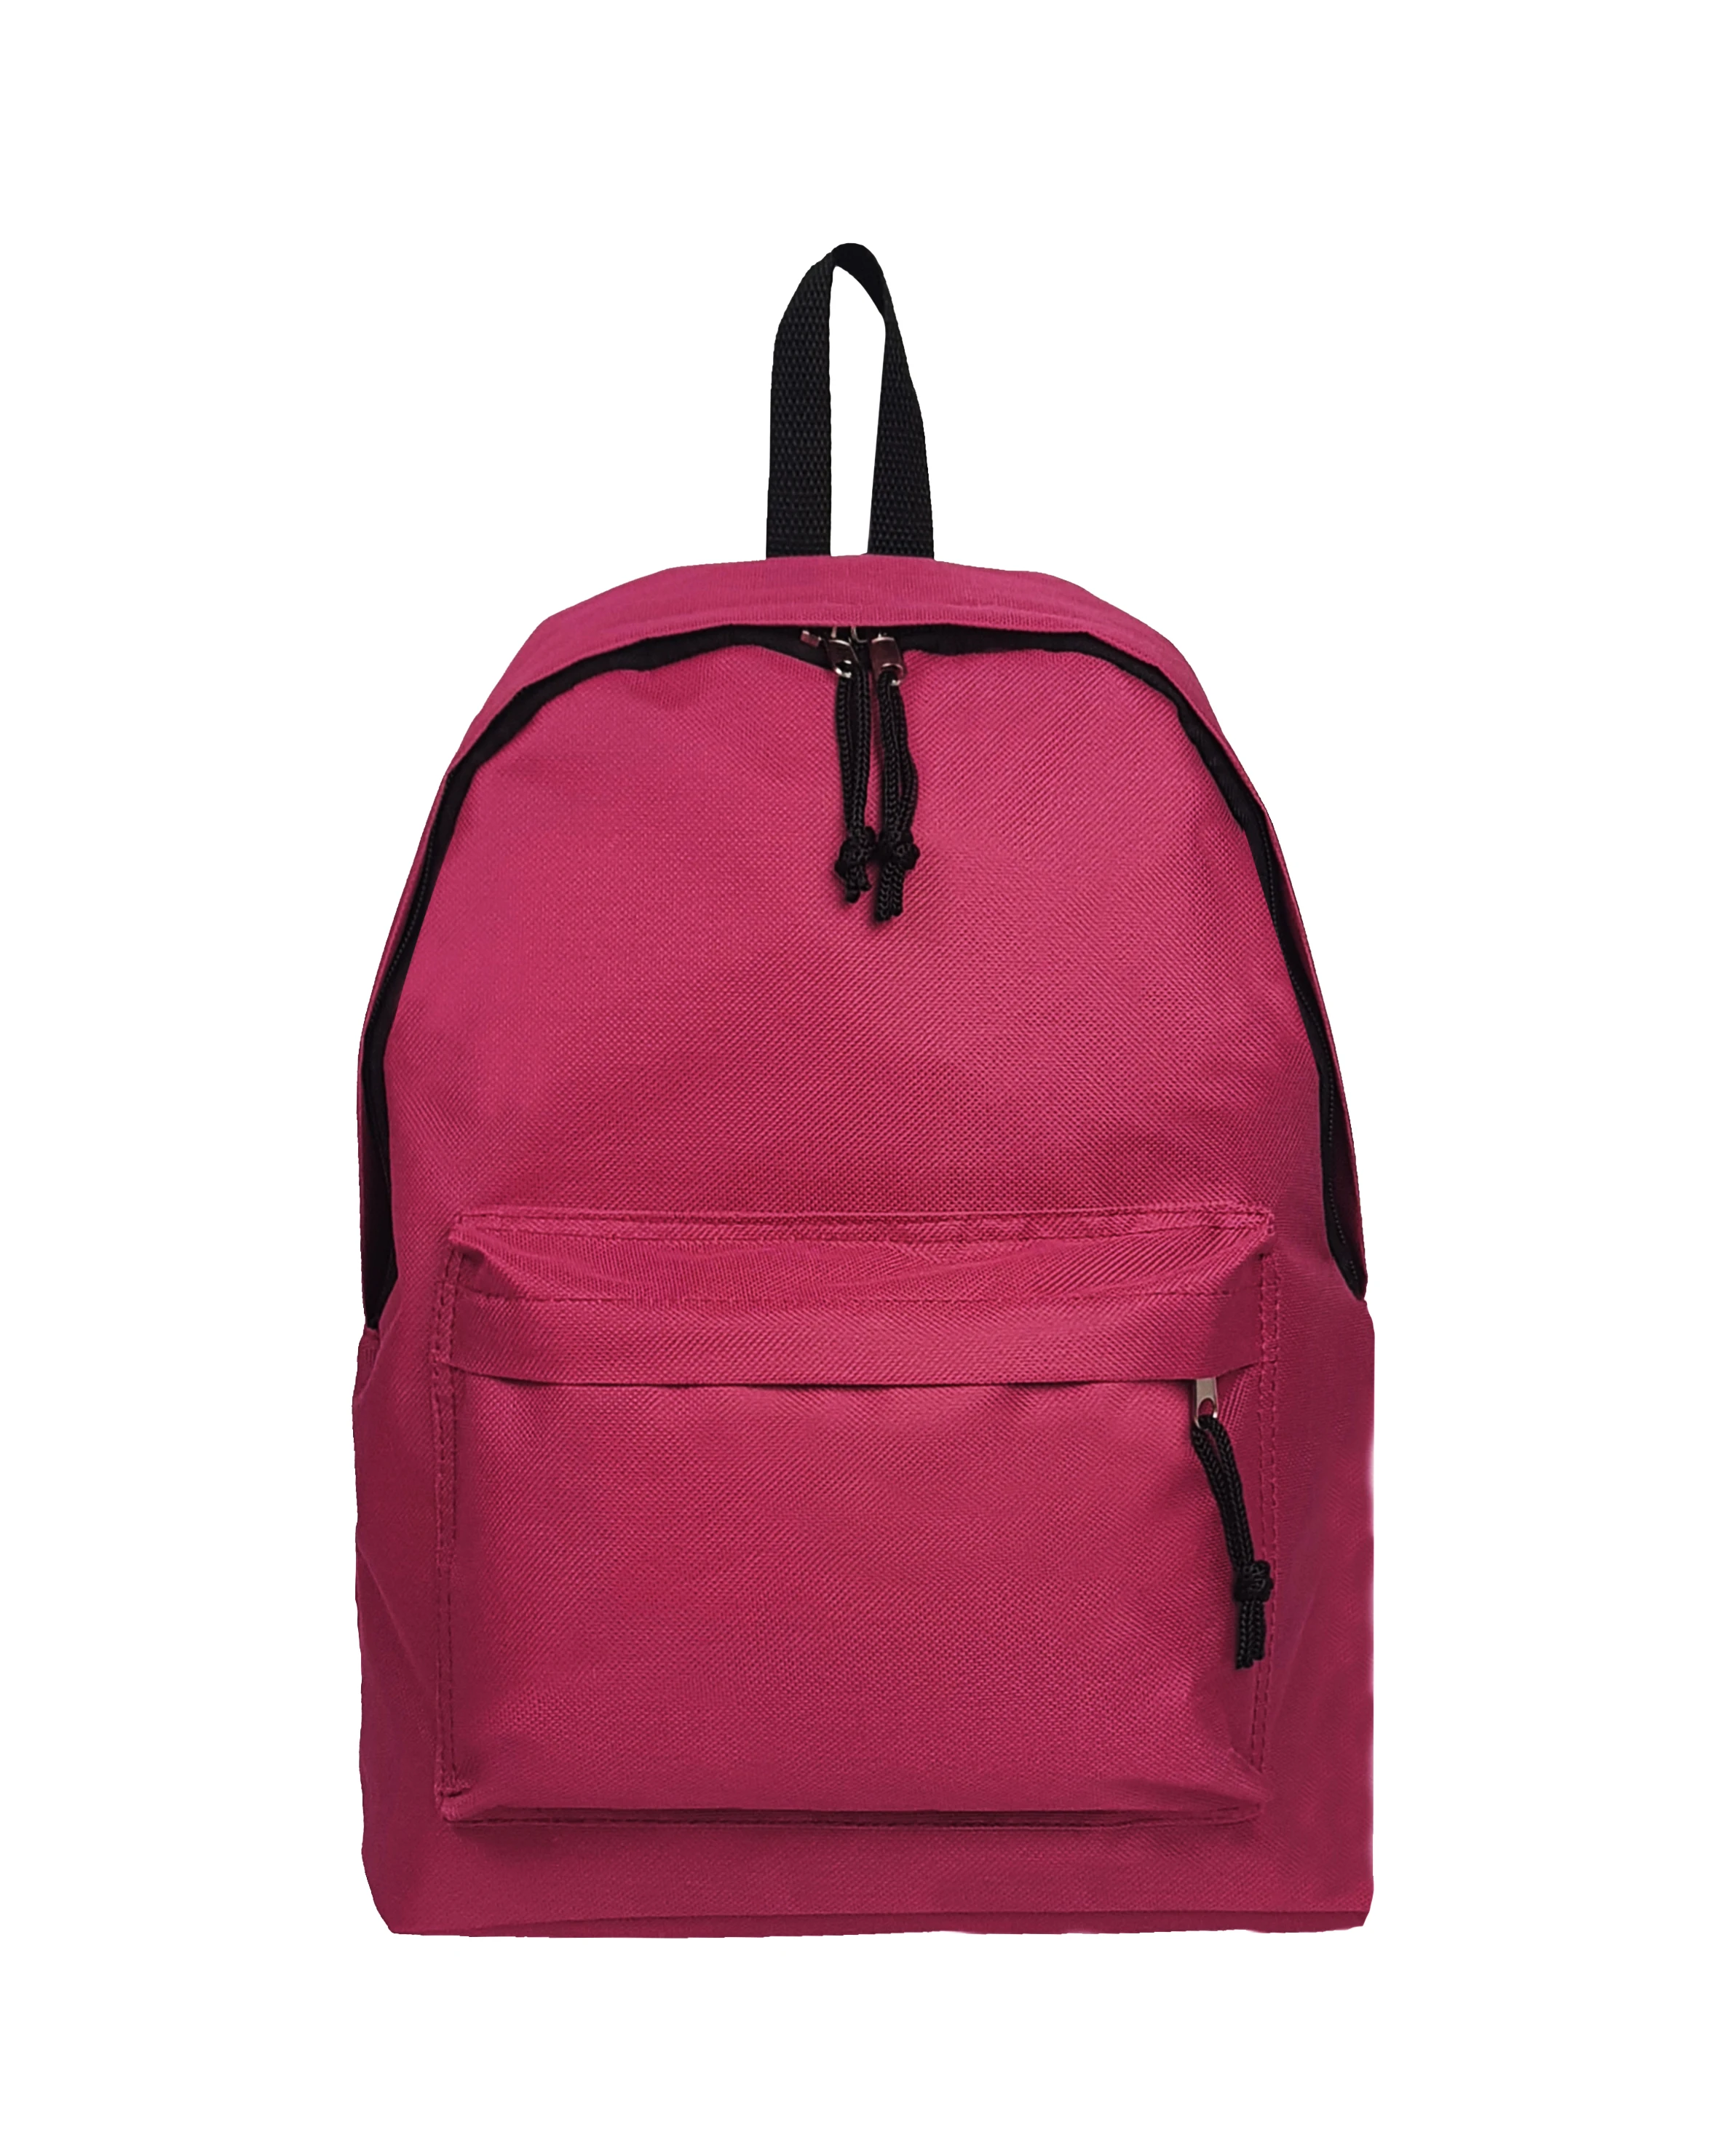 2019 Hot Selling fashion trend kids school bag Backpack of girls